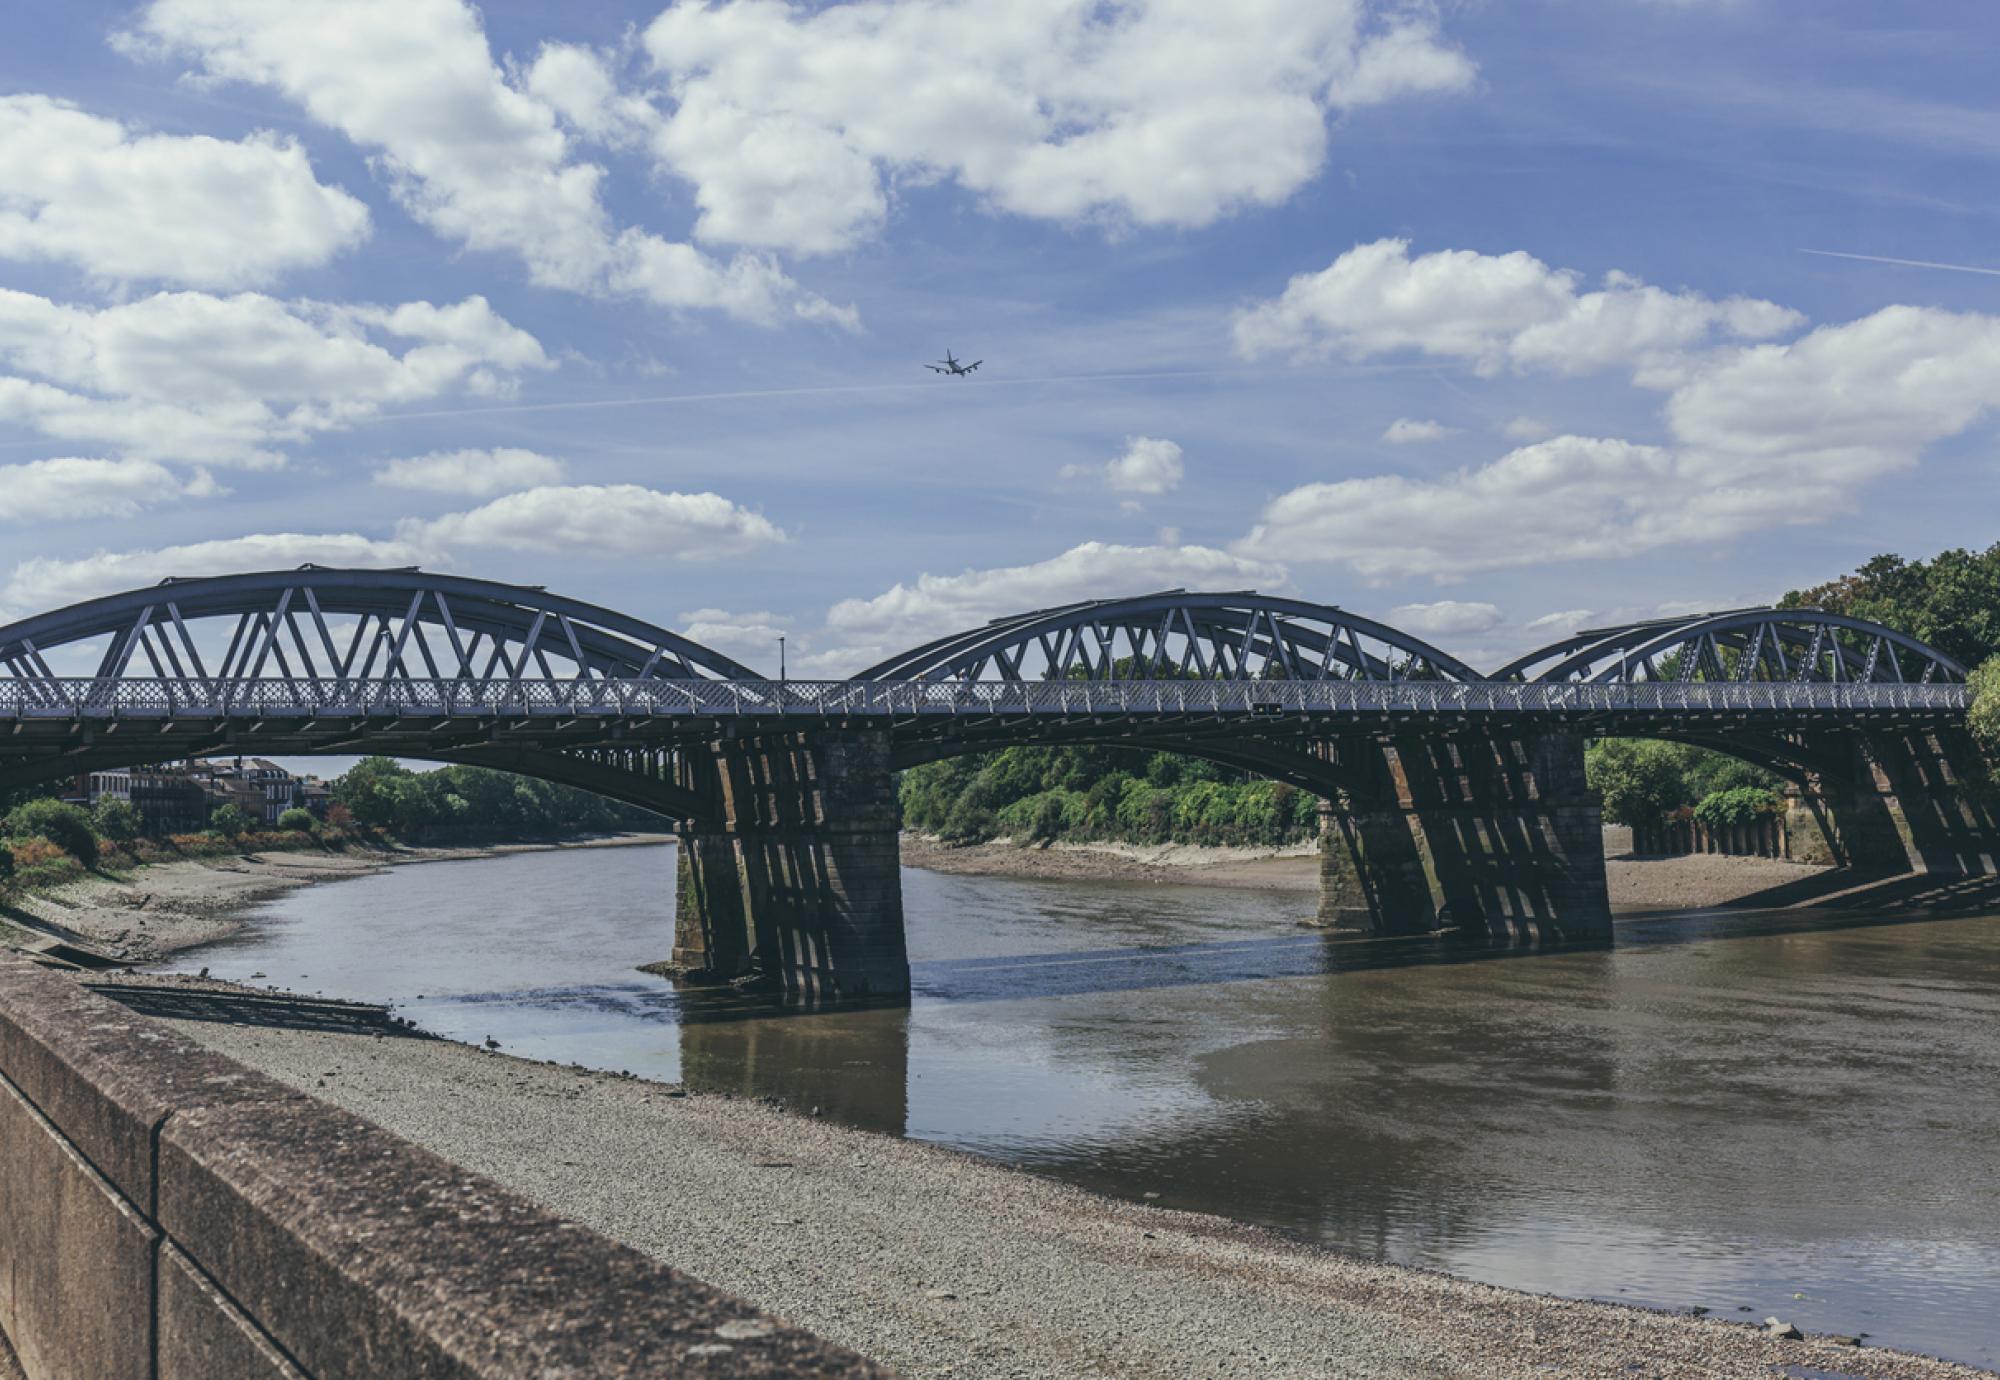 Barnes Railway Bridge located in the London Borough of Richmond upon Thames and the London Borough of Hounslow, via Istock 